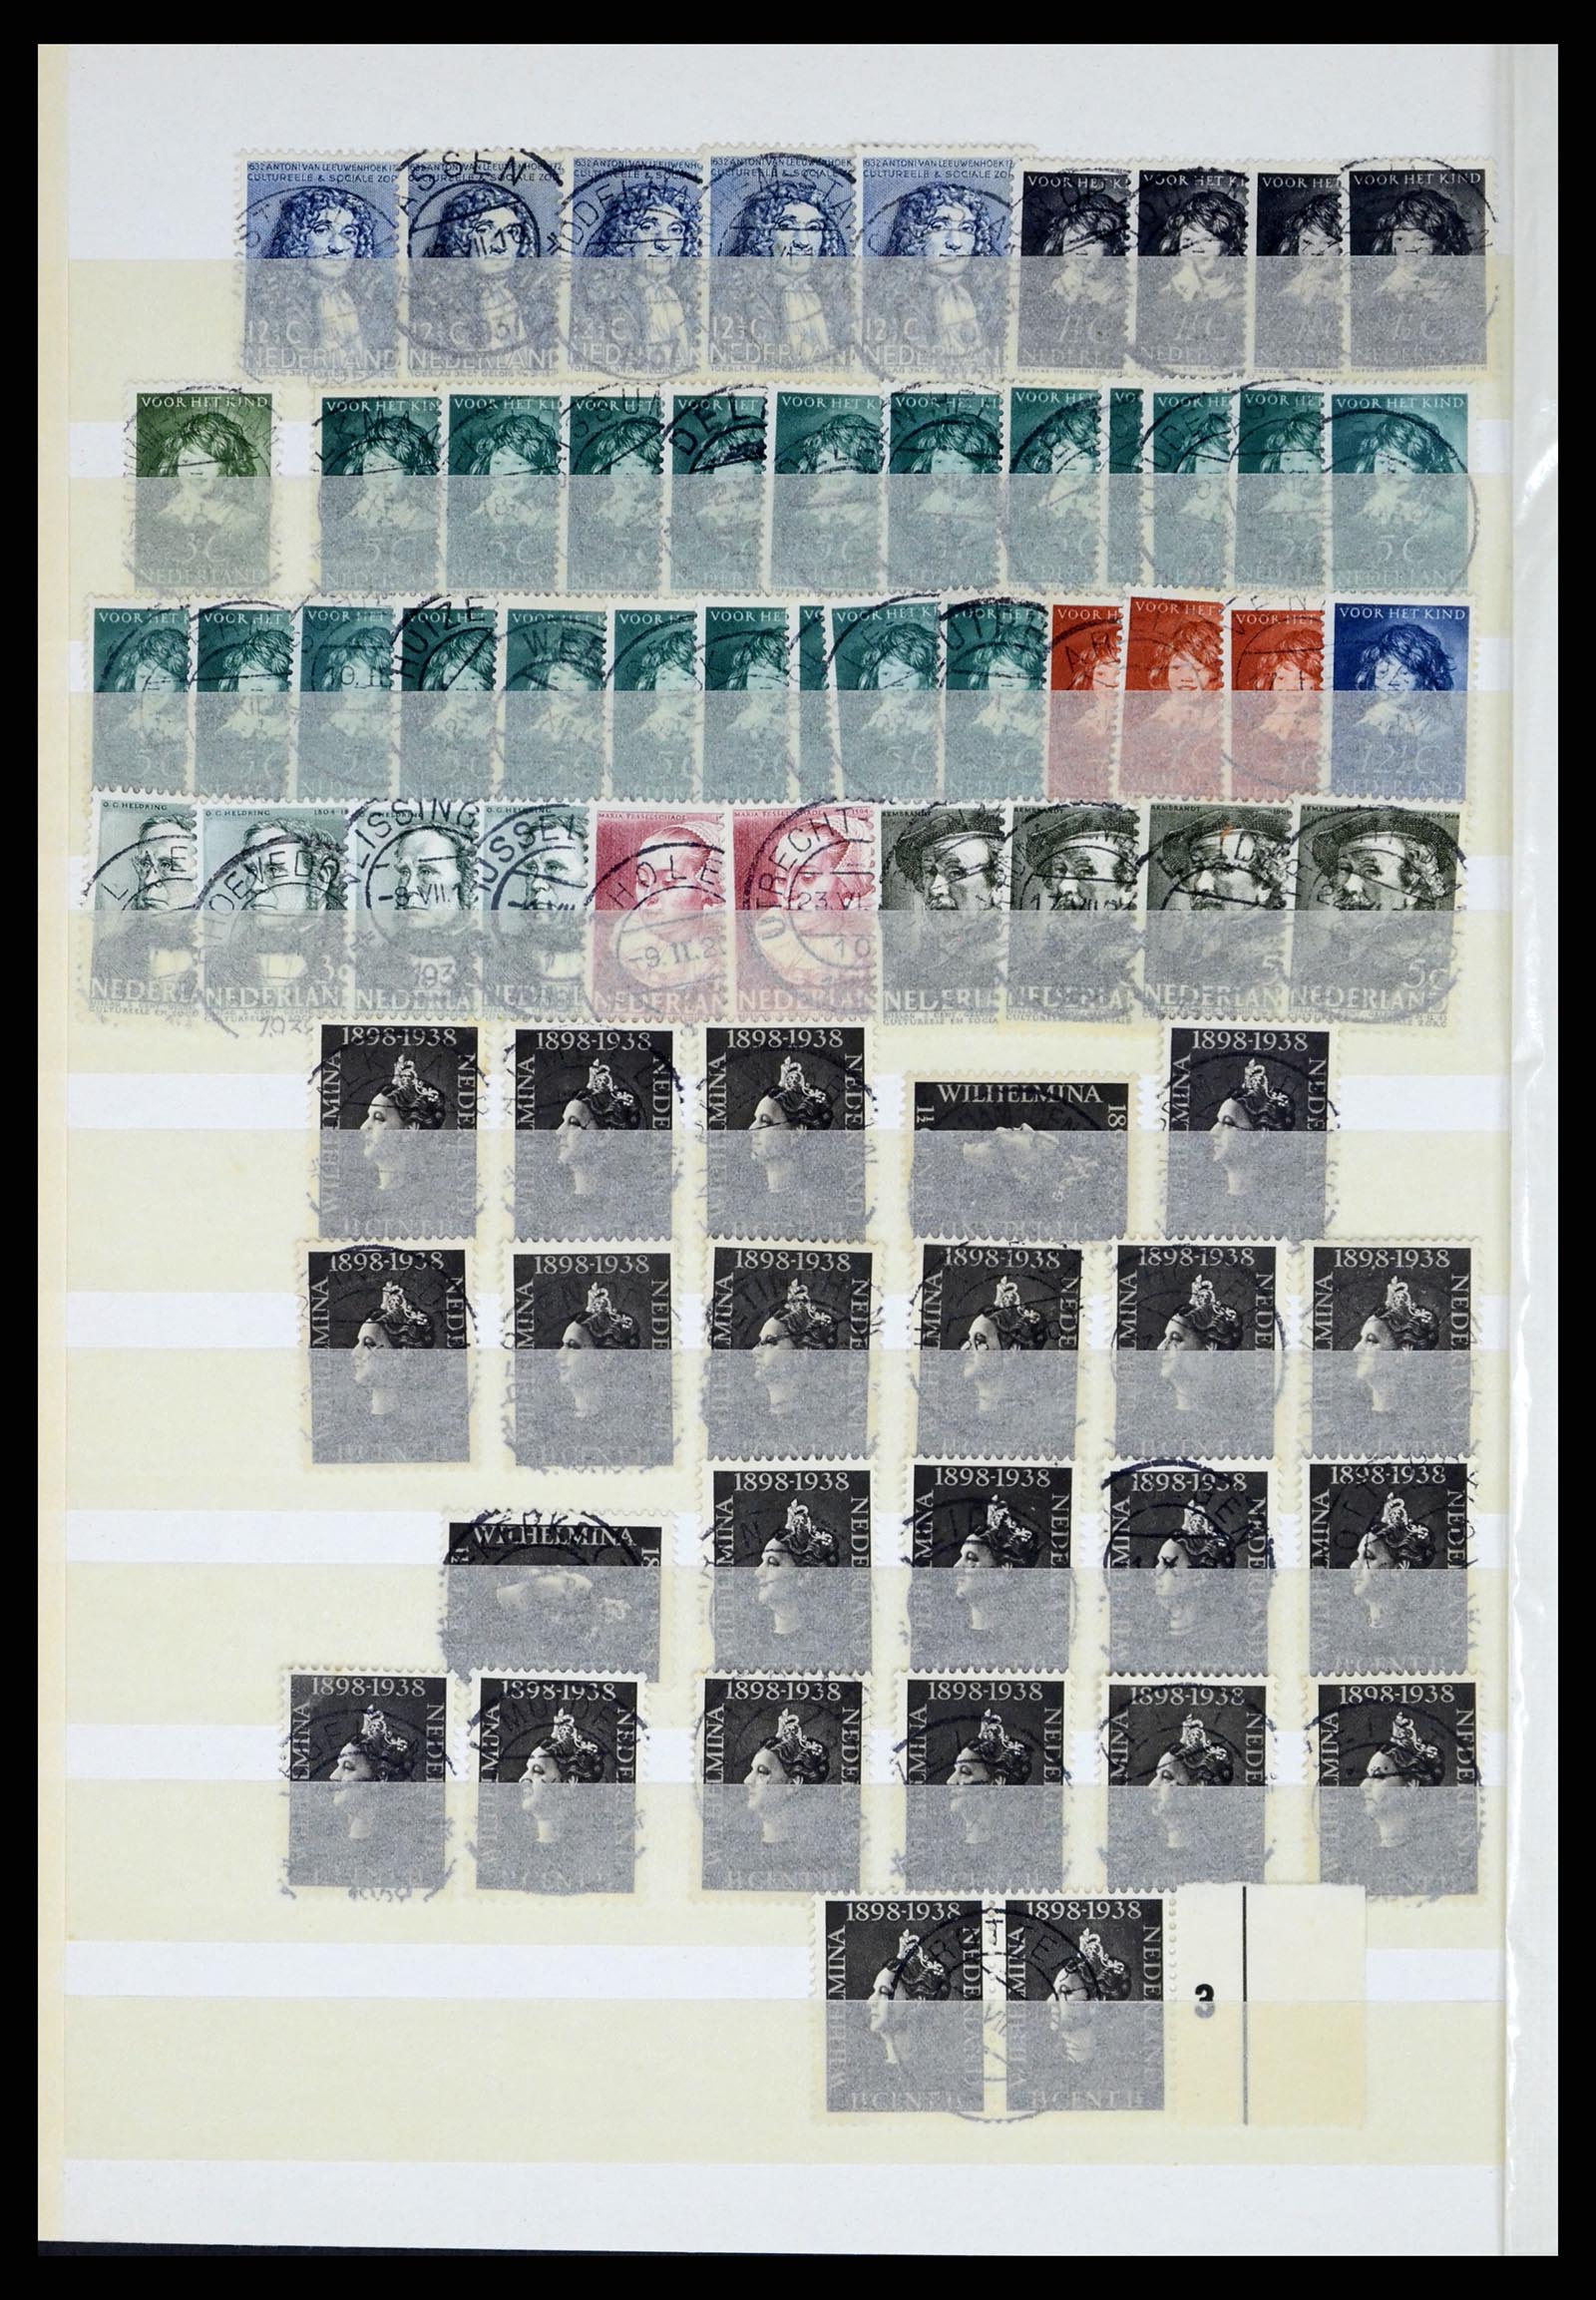 37424 022 - Stamp collection 37424 Netherlands shortbar cancels.